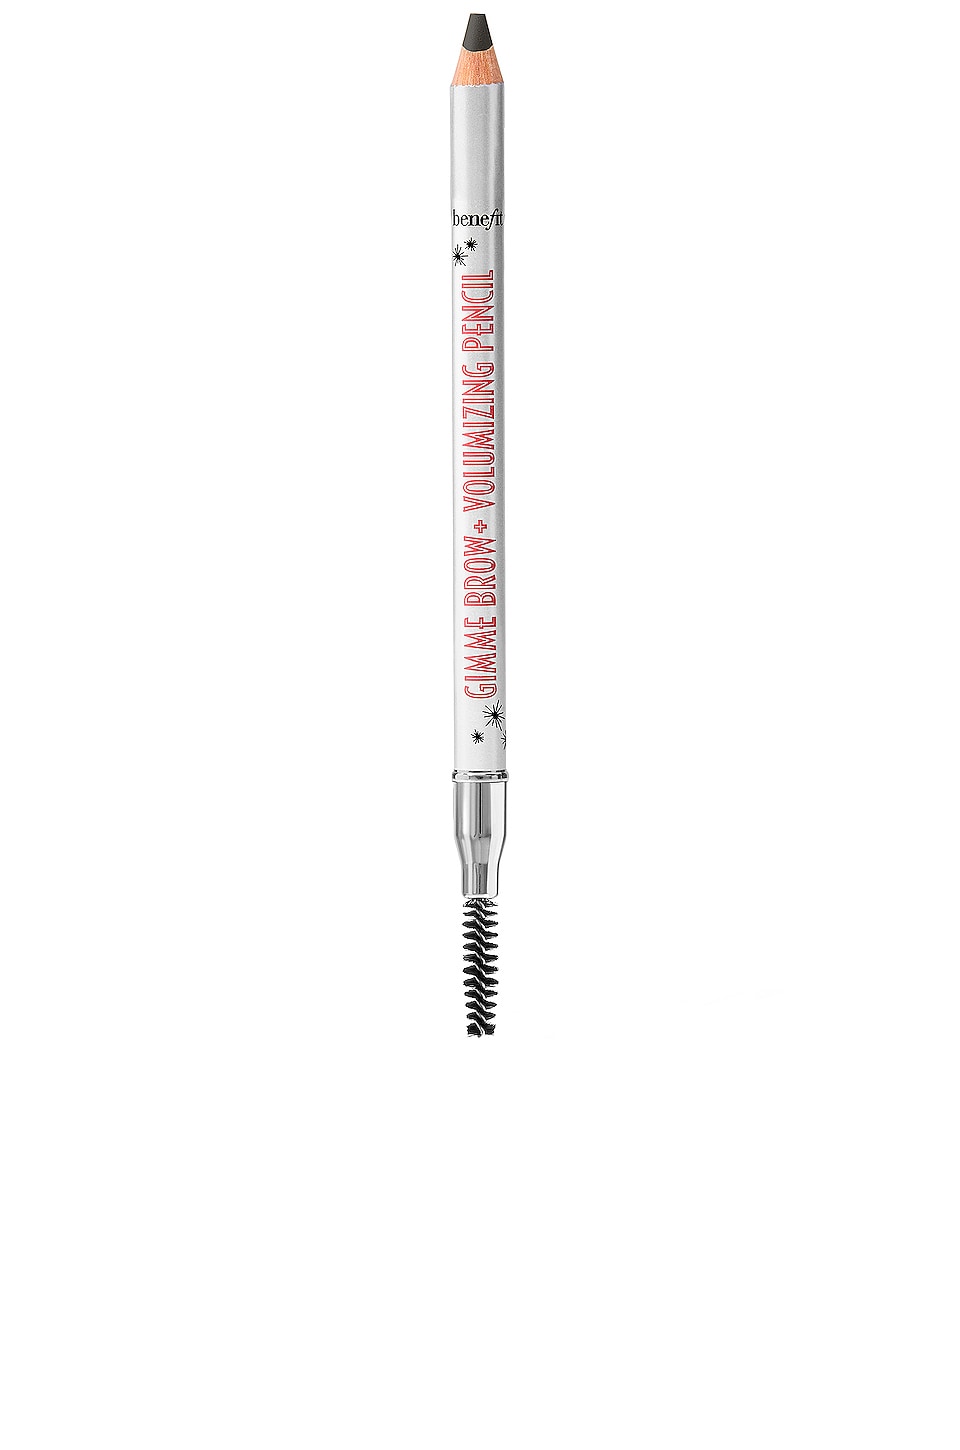 Benefit Cosmetics Gimme Brow + Volumizing Fiber Eyebrow Pencil in 6